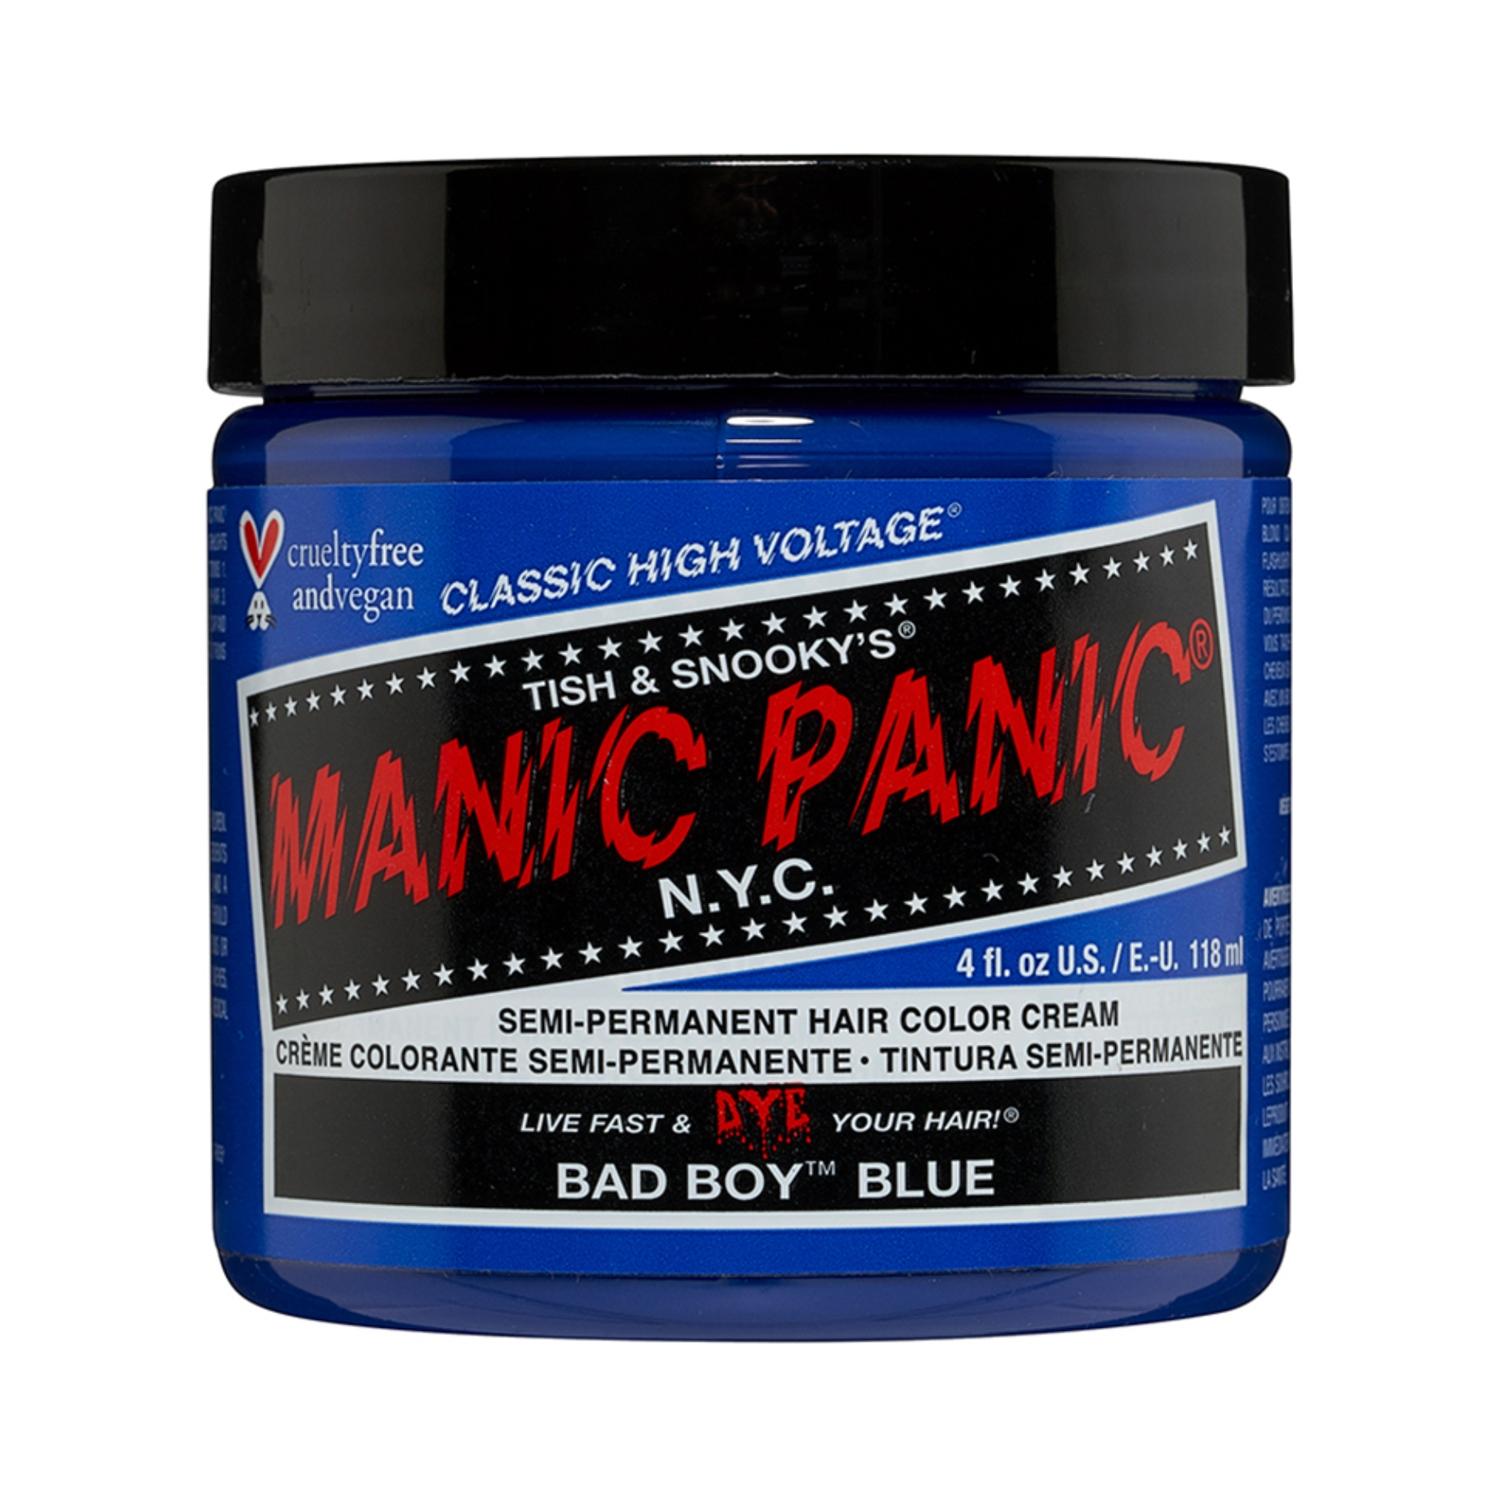 manic panic classic high voltage semi permanent hair color cream - bad boy blue (118ml)